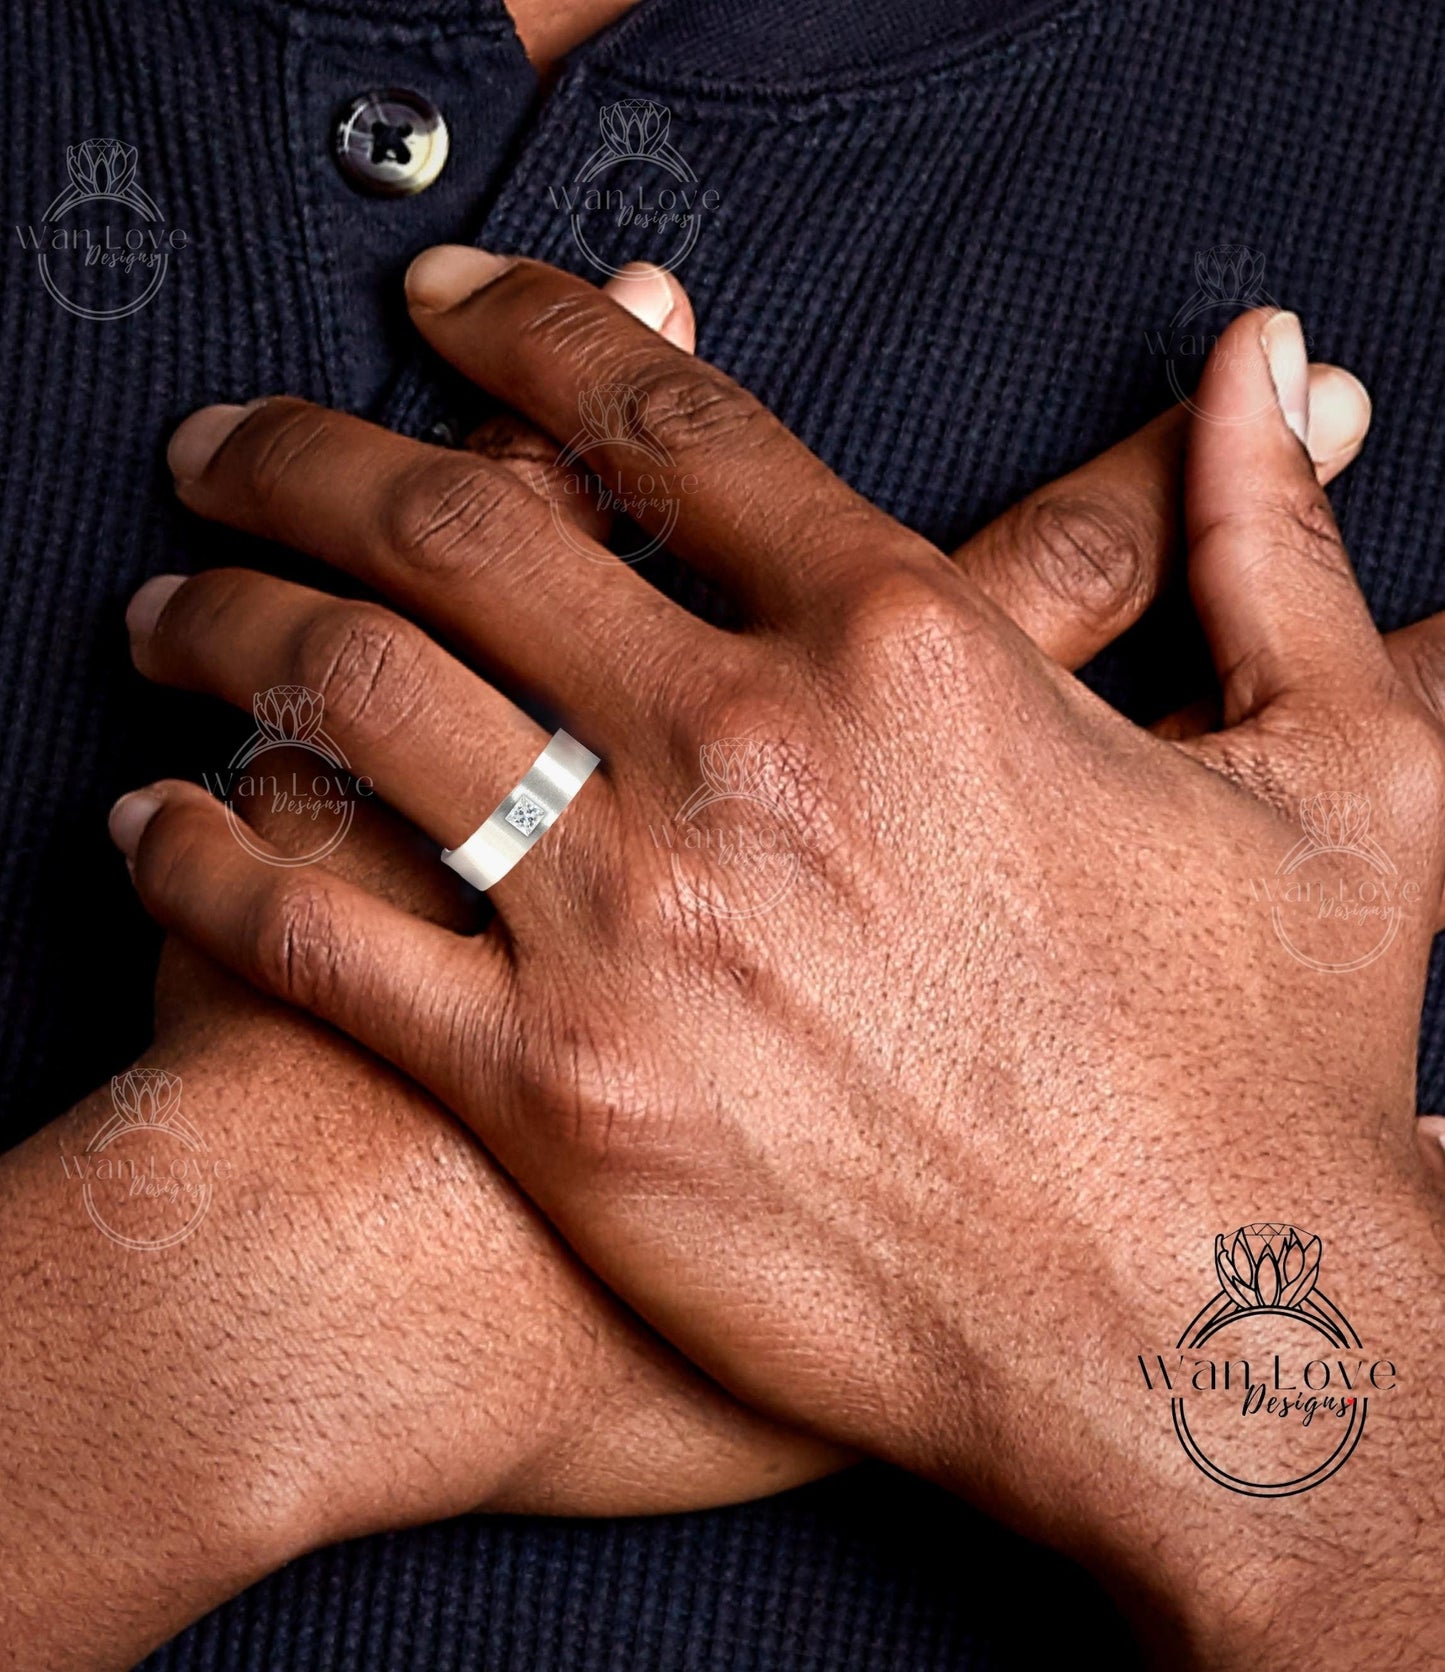 14k 18k Solid Gold Princess cut Wedding Ring for Men, Gold Mens Wedding Band, Custom Birthstone Mens Wedding Ring, Rings for Men, Gift him Wan Love Designs